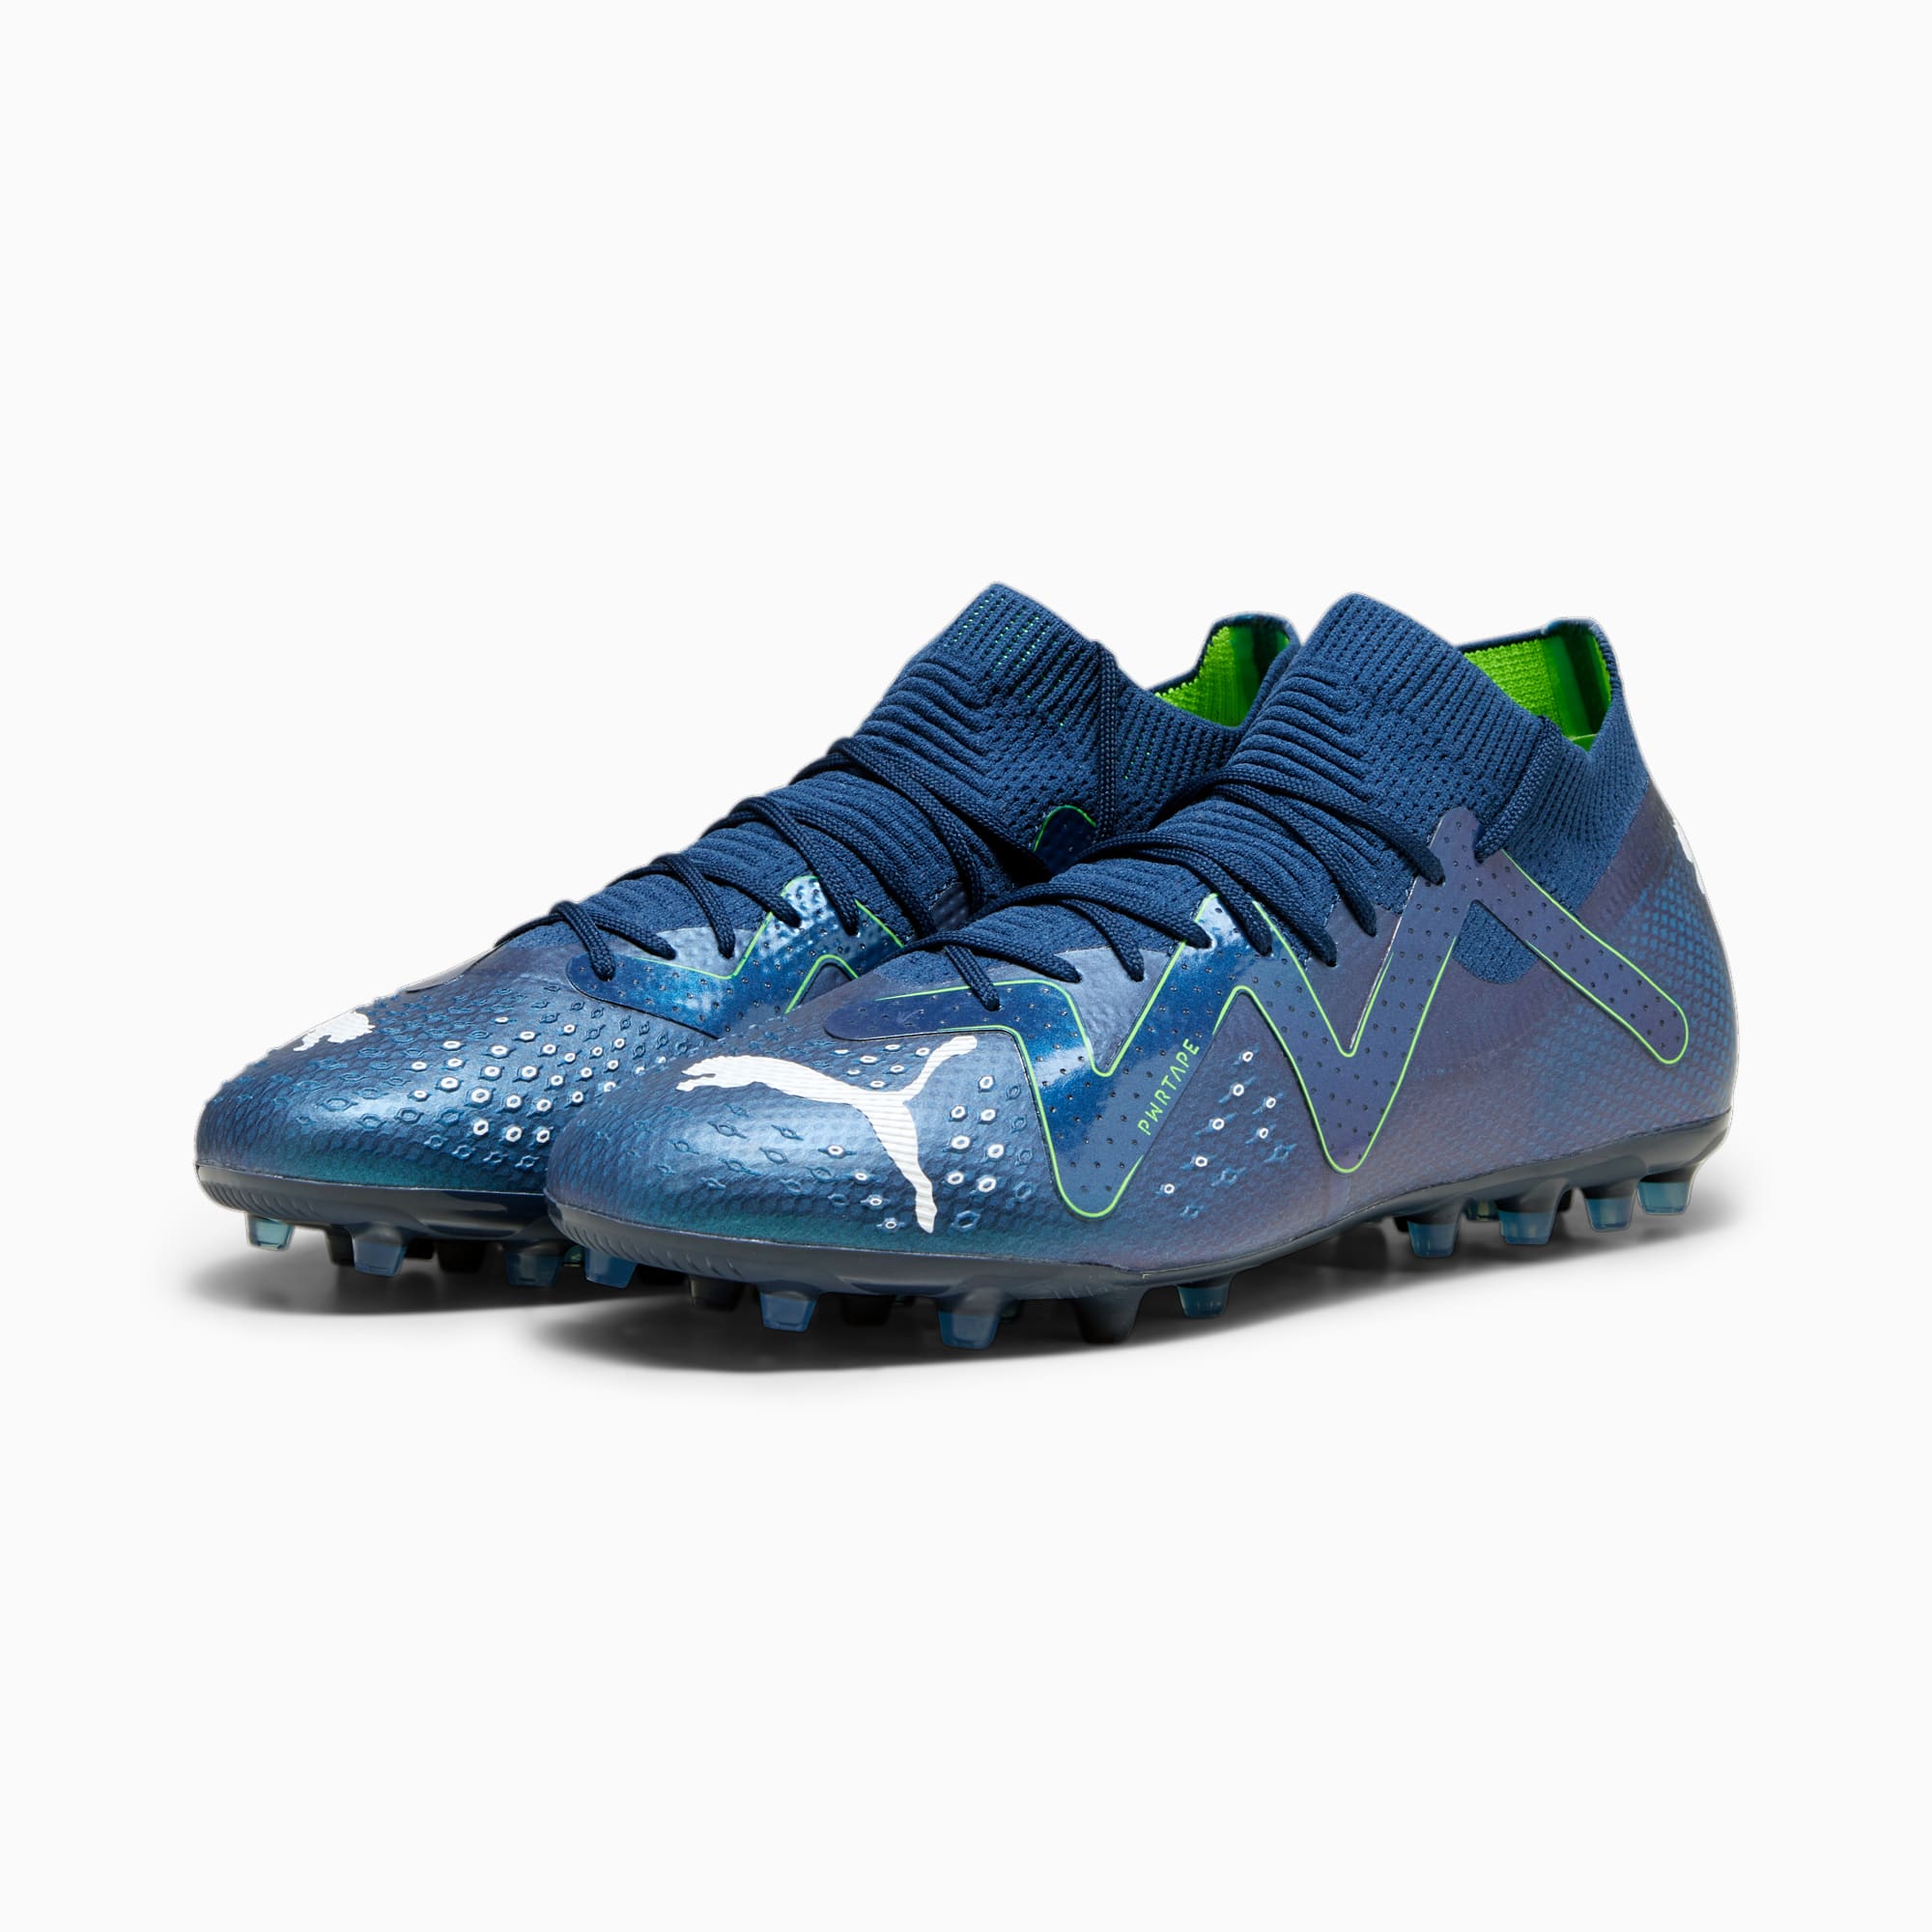 PUMA Chaussures De Football FUTURE PRO MG Pour Homme, Bleu/Vert/Blanc